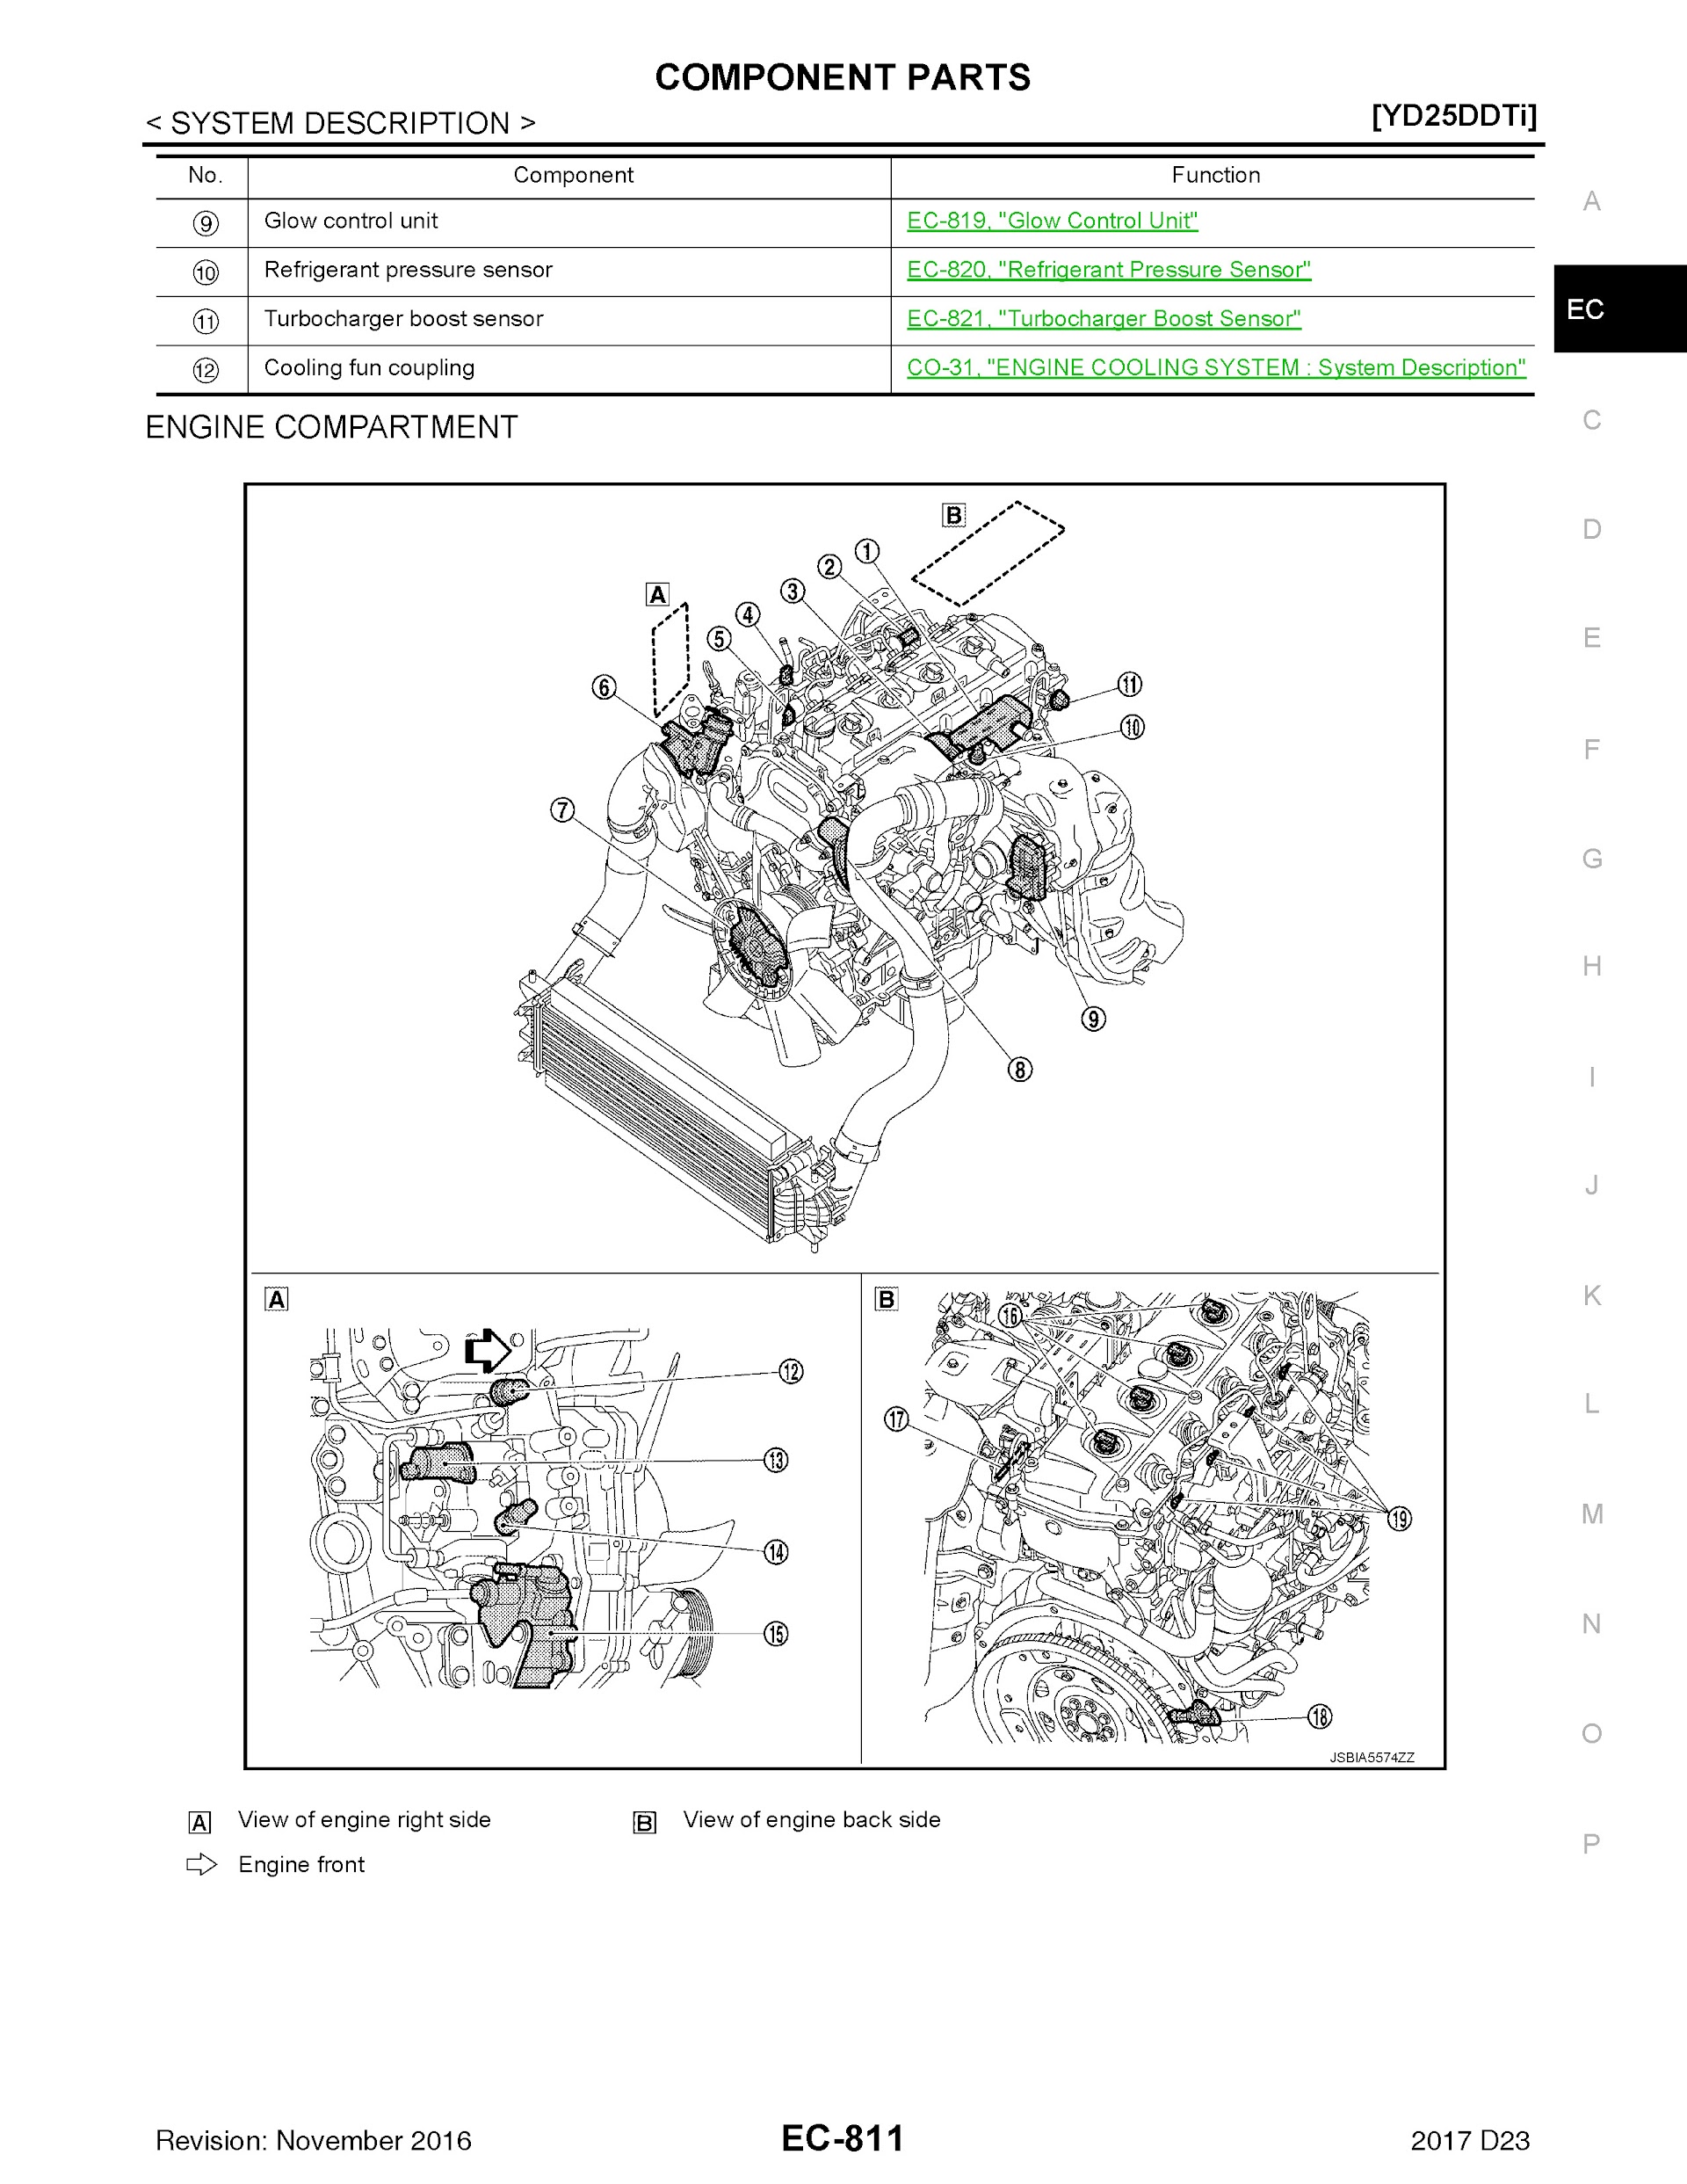 2015-2020 Nissan Navara NP300 repair manual, Engine Unit Component Parts